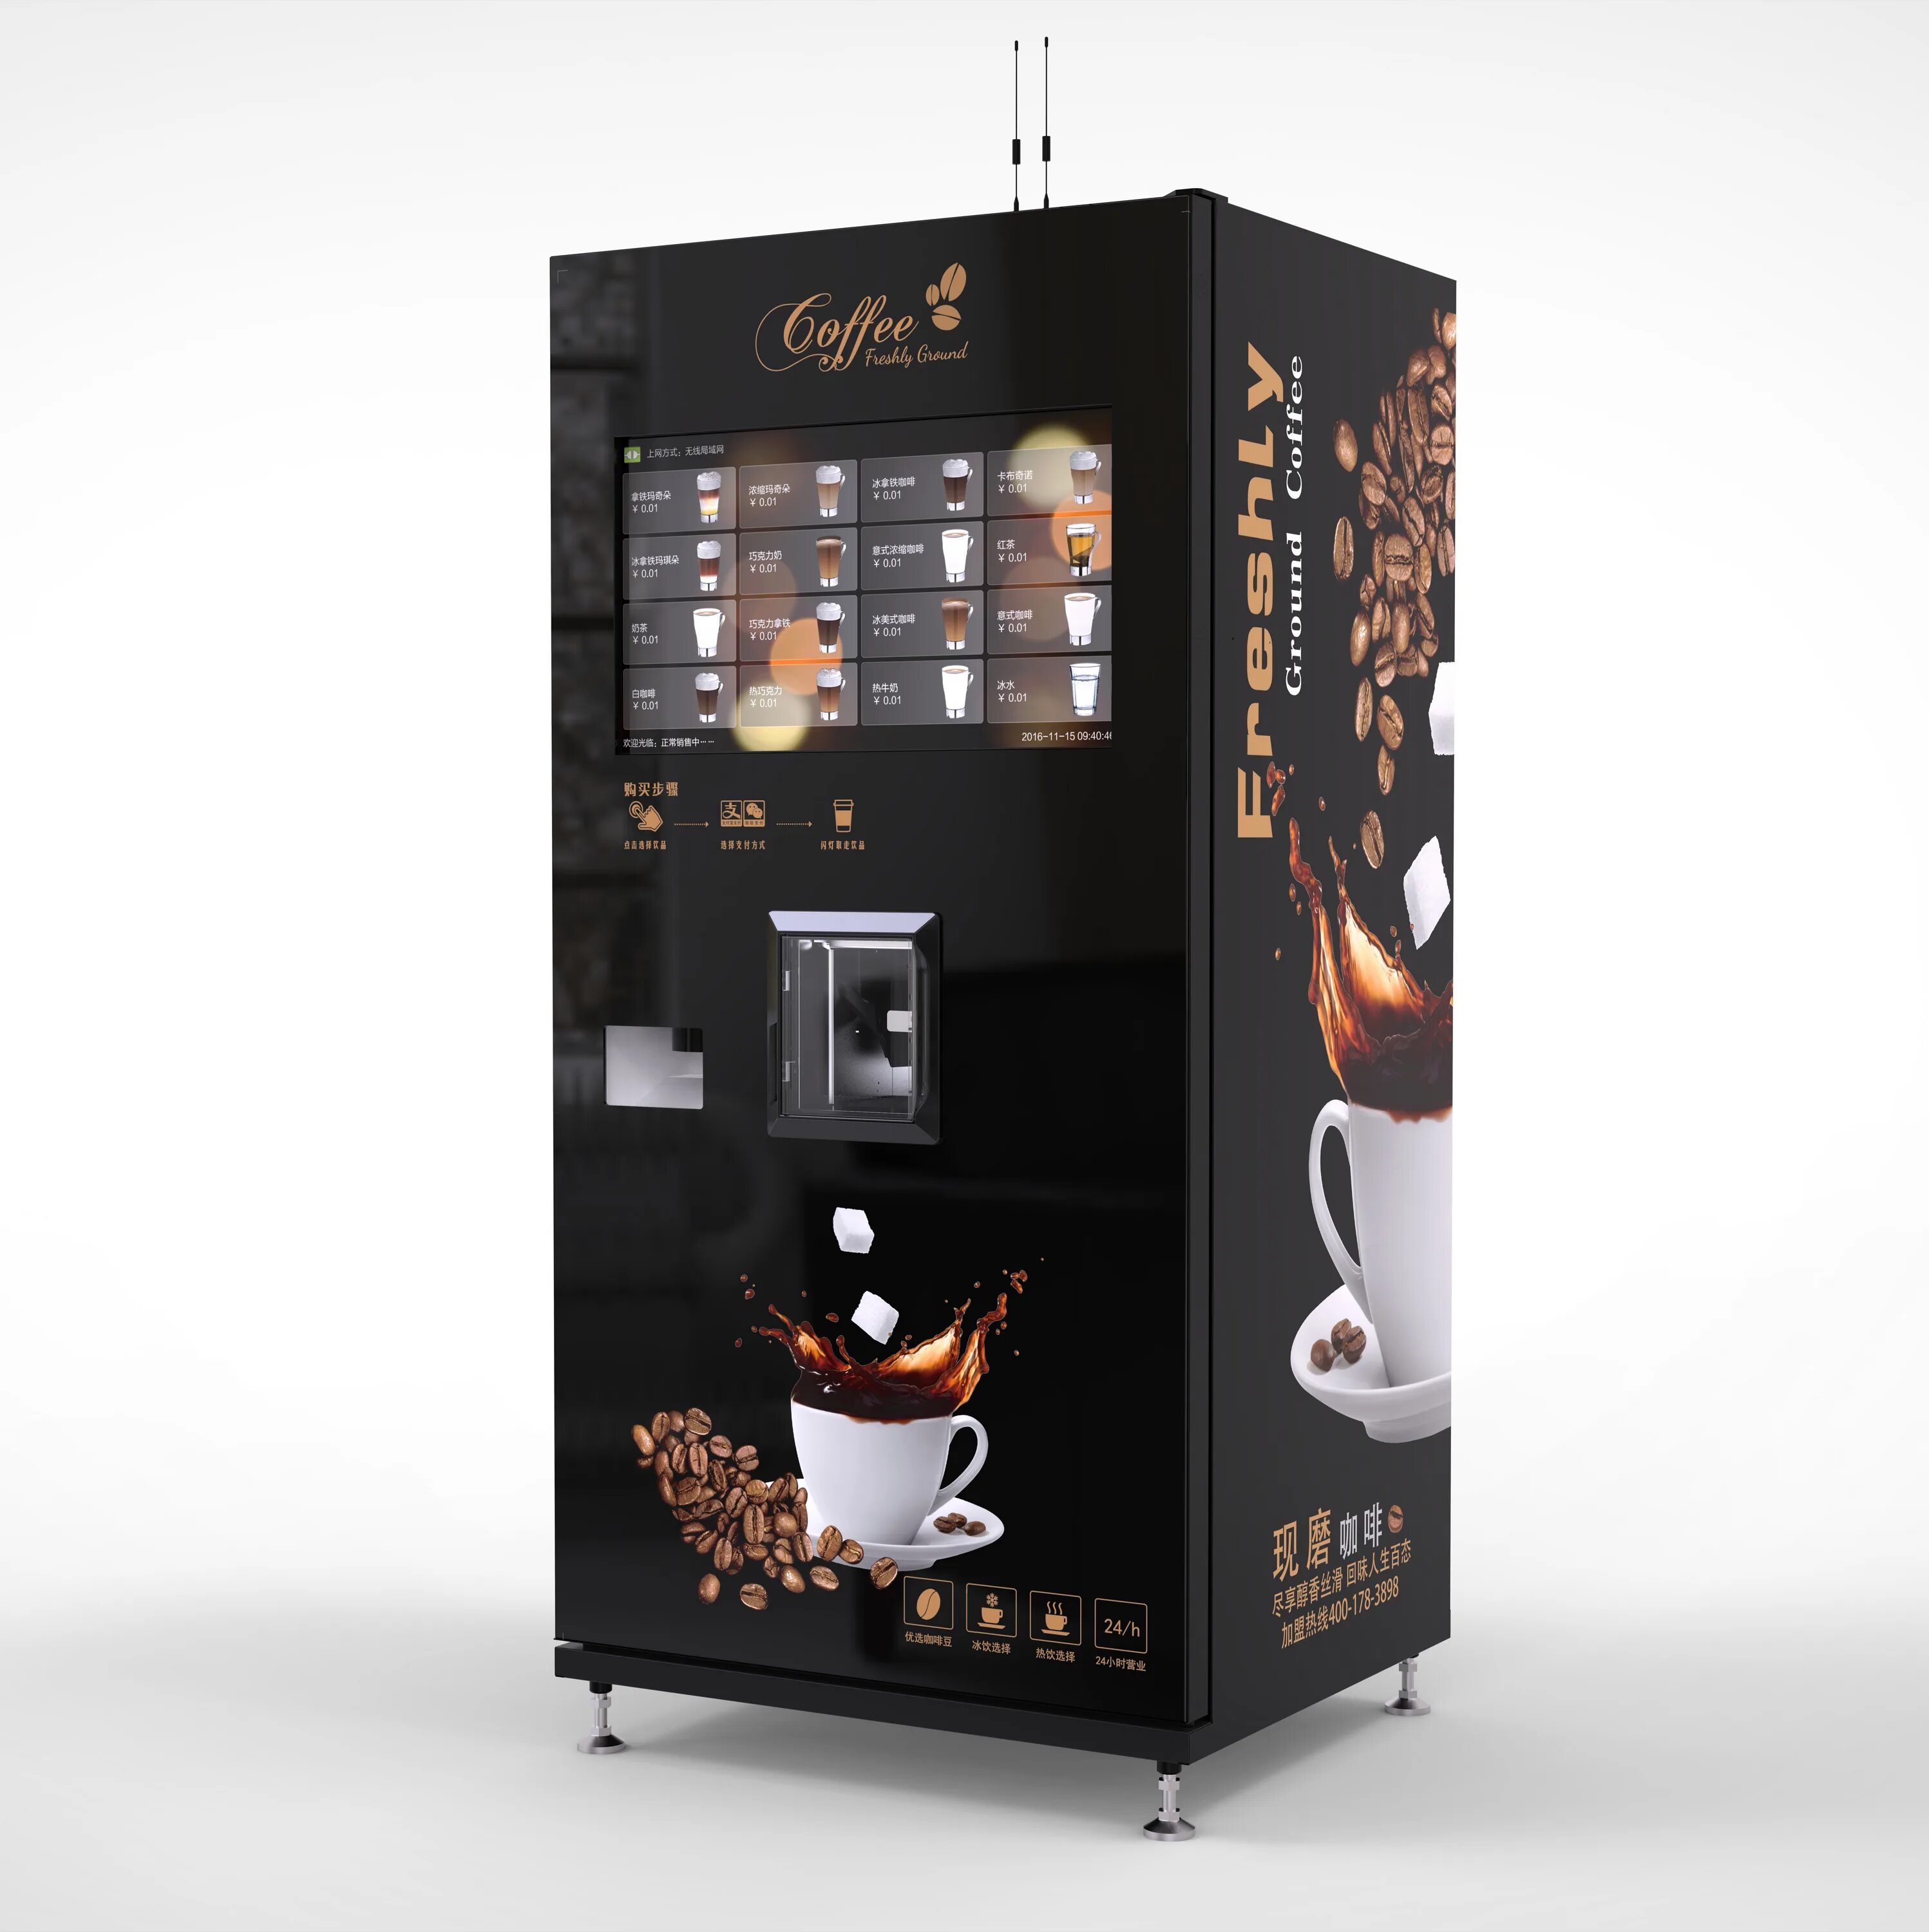 Кофейный аппарат кофе. Кофейный автомат Saeco Oasi 400. Кофейный торговый автомат Saeco Atlante 500 1 кофемолка. Вендинговые аппараты Necta. Вендинговый аппарат Саеко 400.